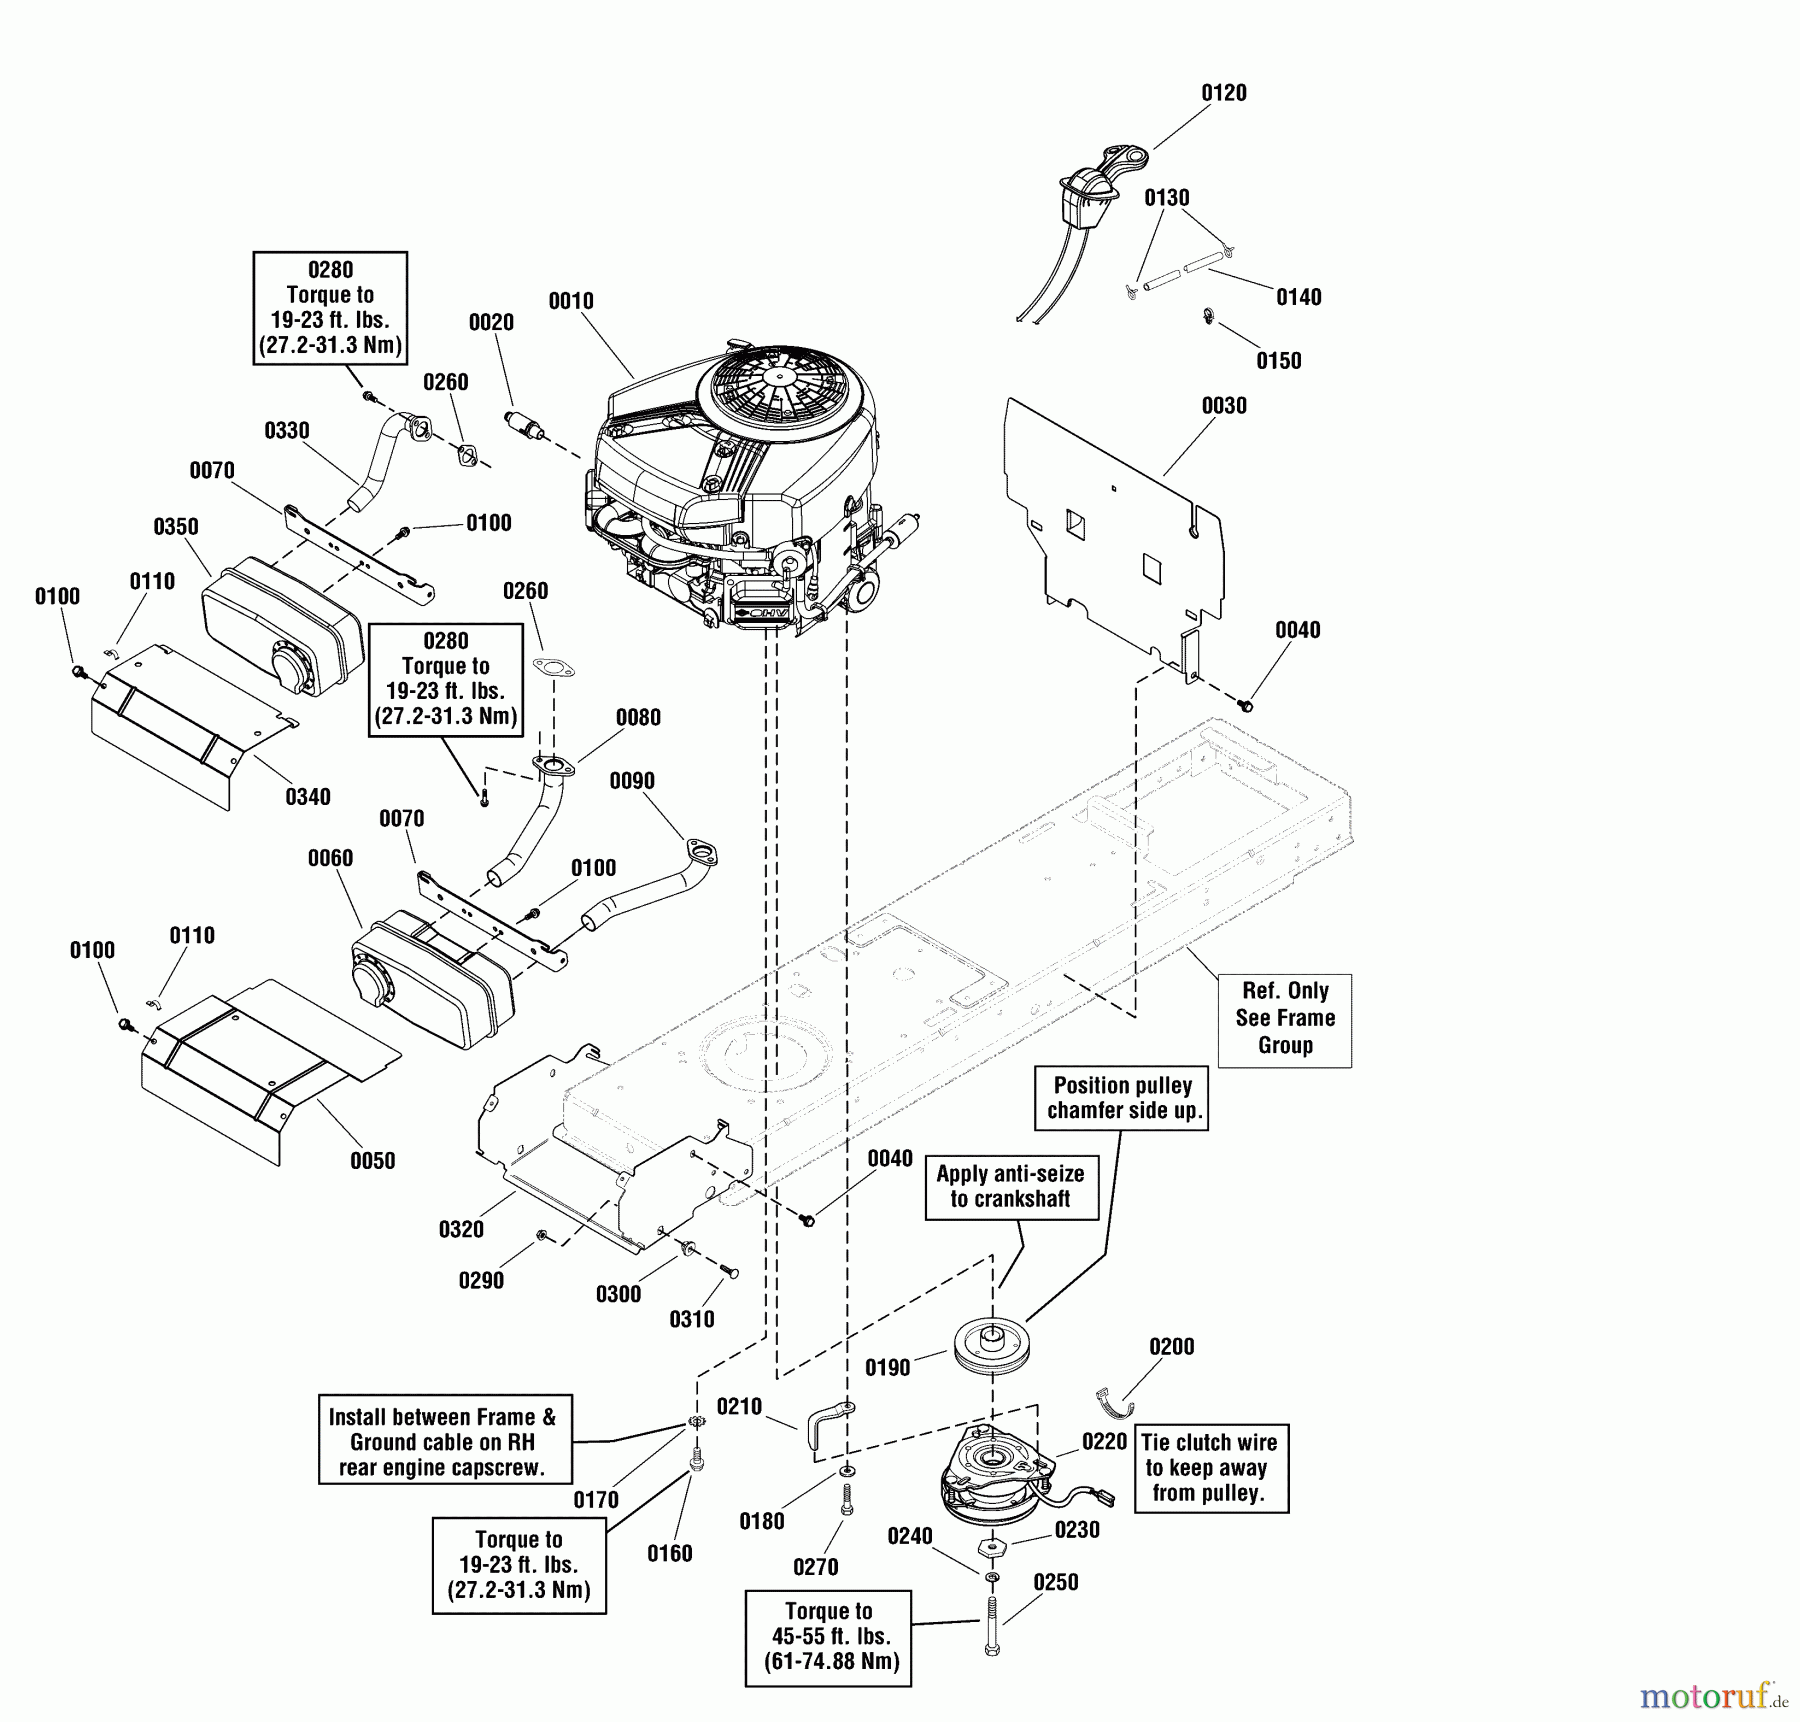  Snapper Rasen- und Gartentraktoren ESPX2046 (2691103-00) - Snapper 46